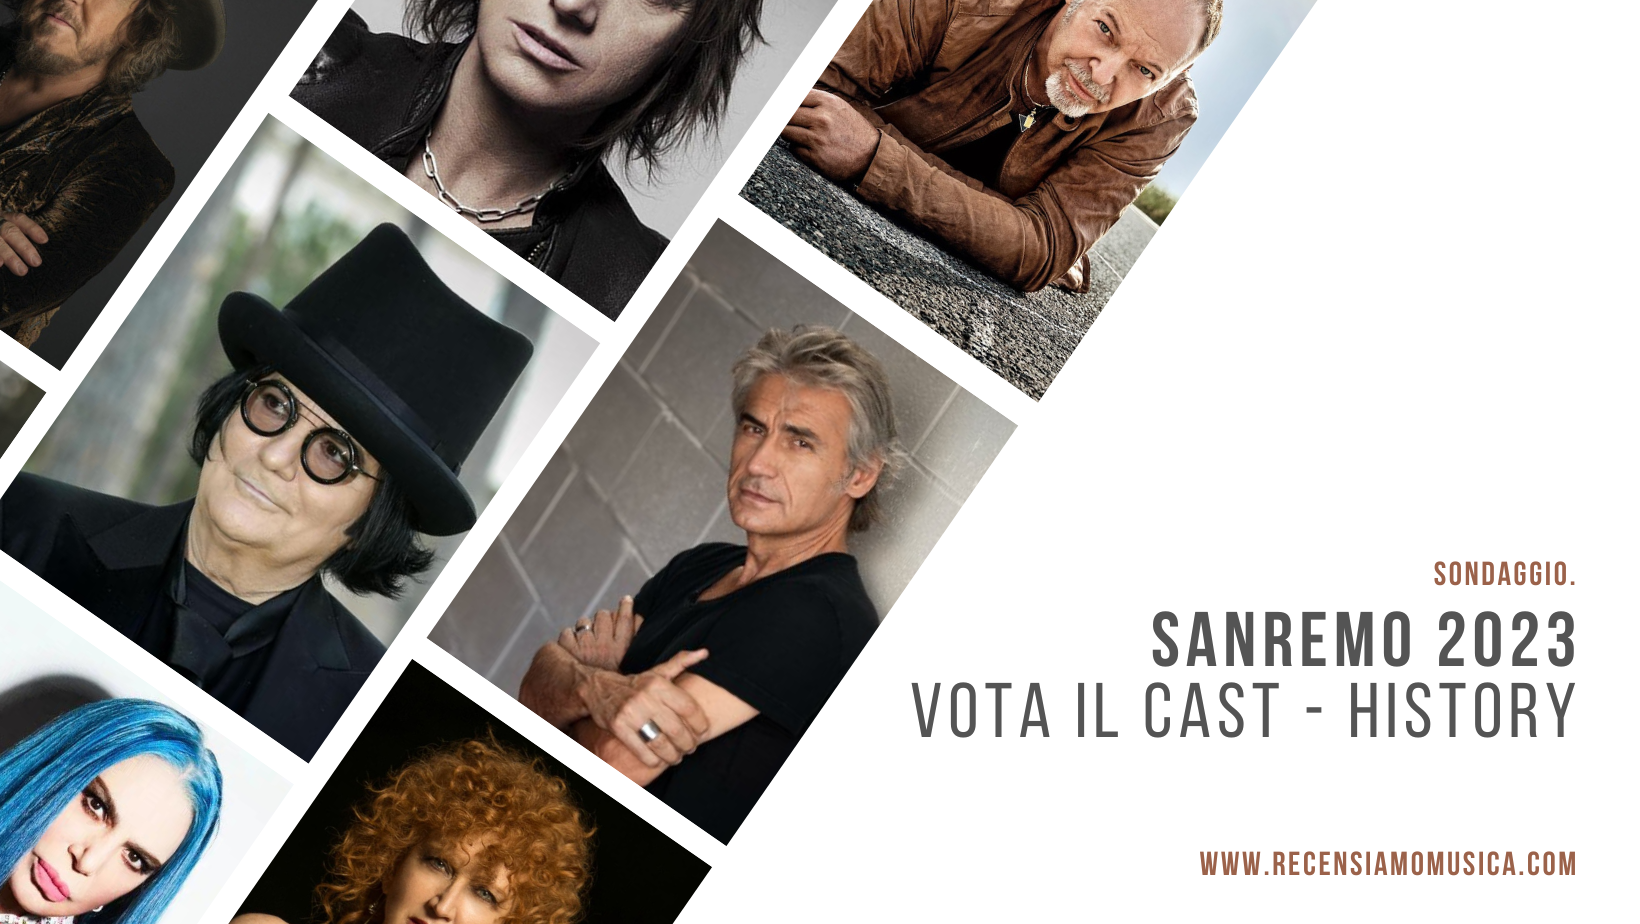 Sanremo 2023 - History cast sondaggio